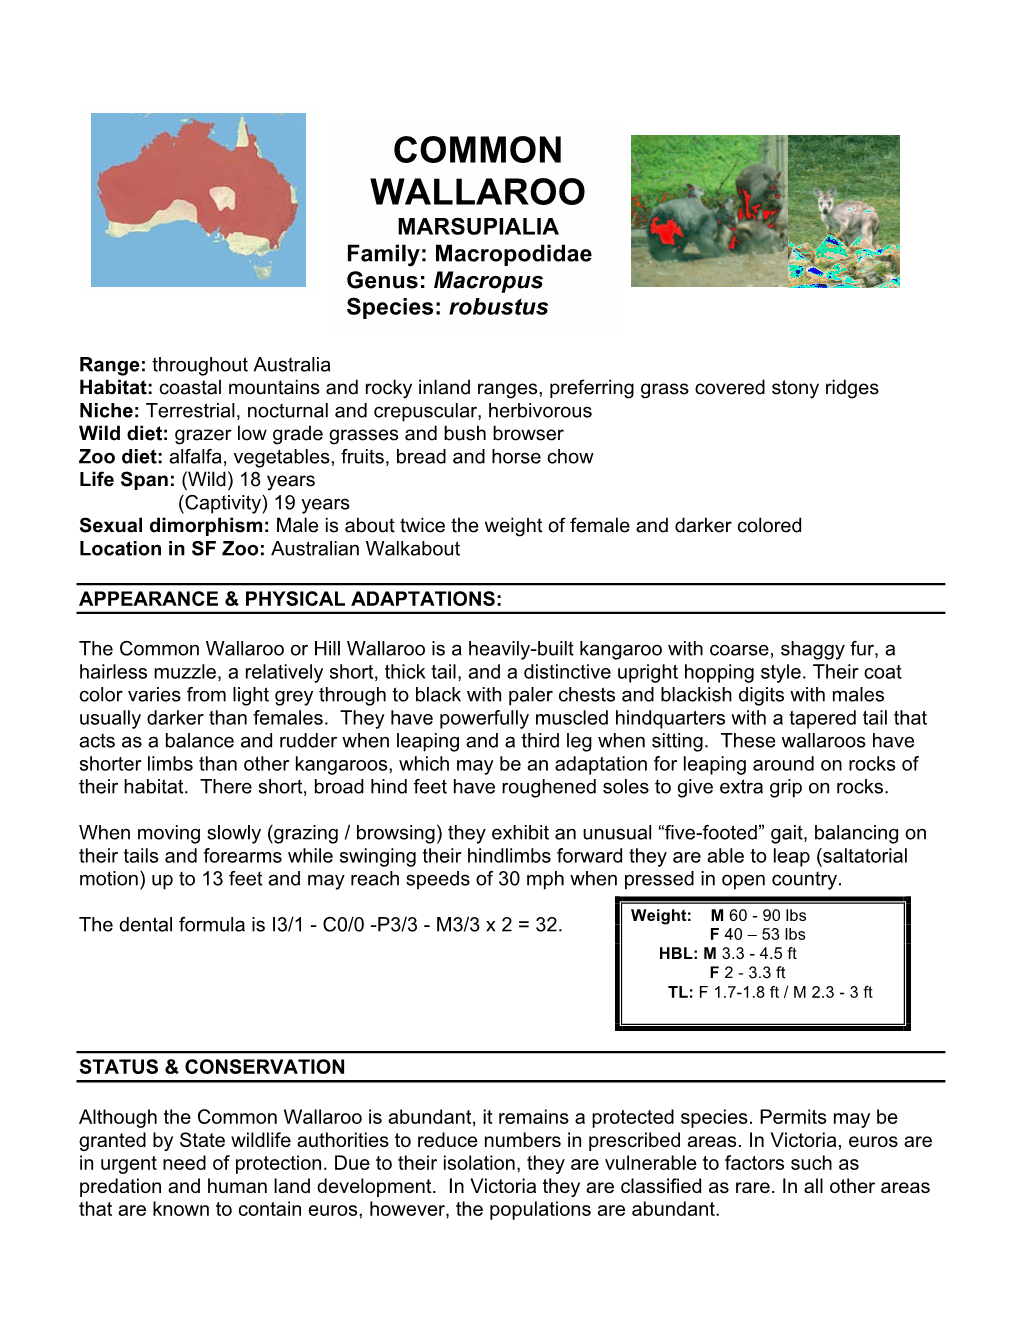 COMMON WALLAROO MARSUPIALIA Family: Macropodidae Genus: Macropus Species: Robustus